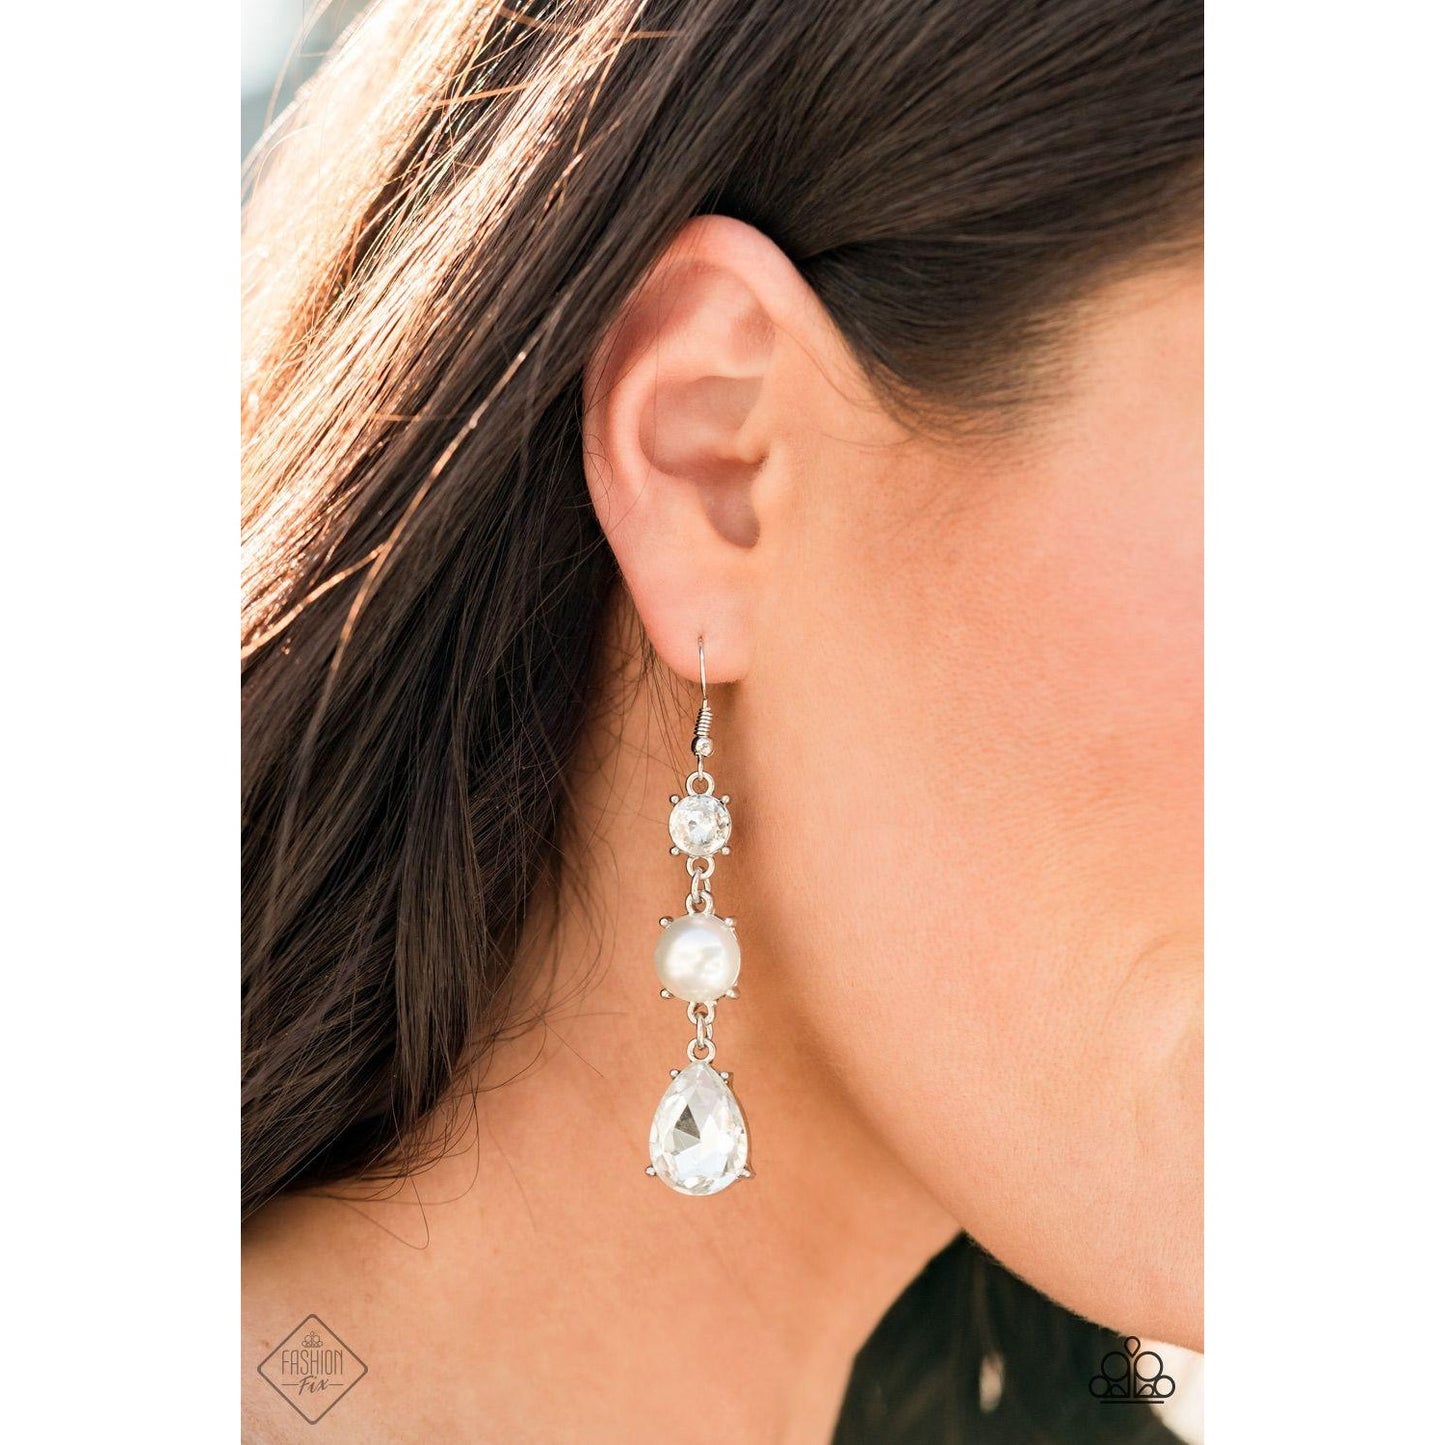 Unpredictable Shimmer - White Earrings Fashion Fix 721